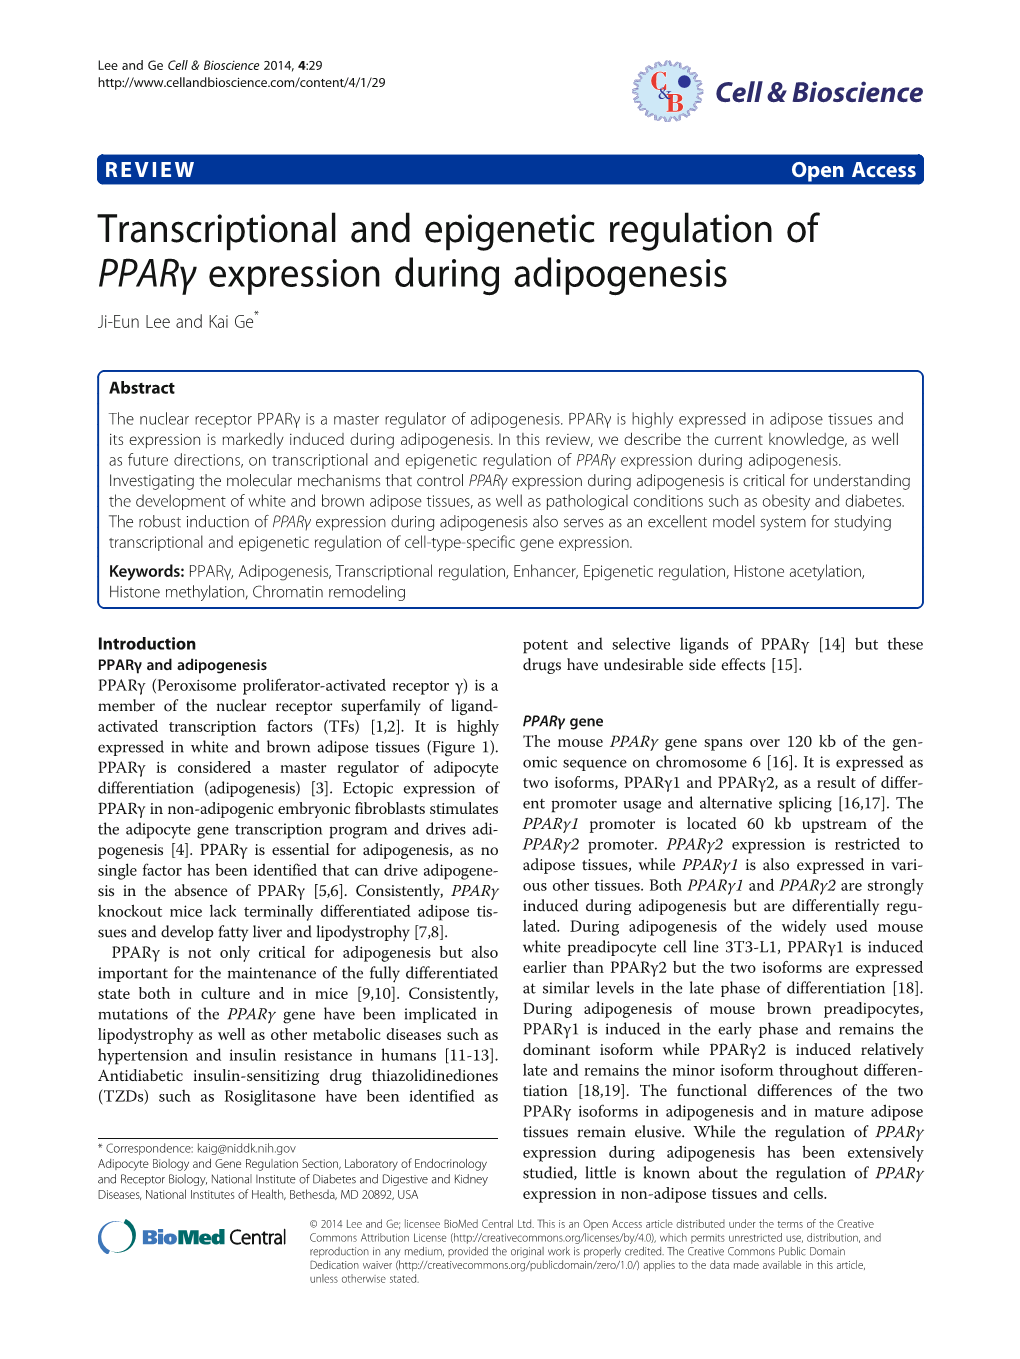 Transcriptional and Epigenetic Regulation of Pparγ Expression During Adipogenesis Ji-Eun Lee and Kai Ge*